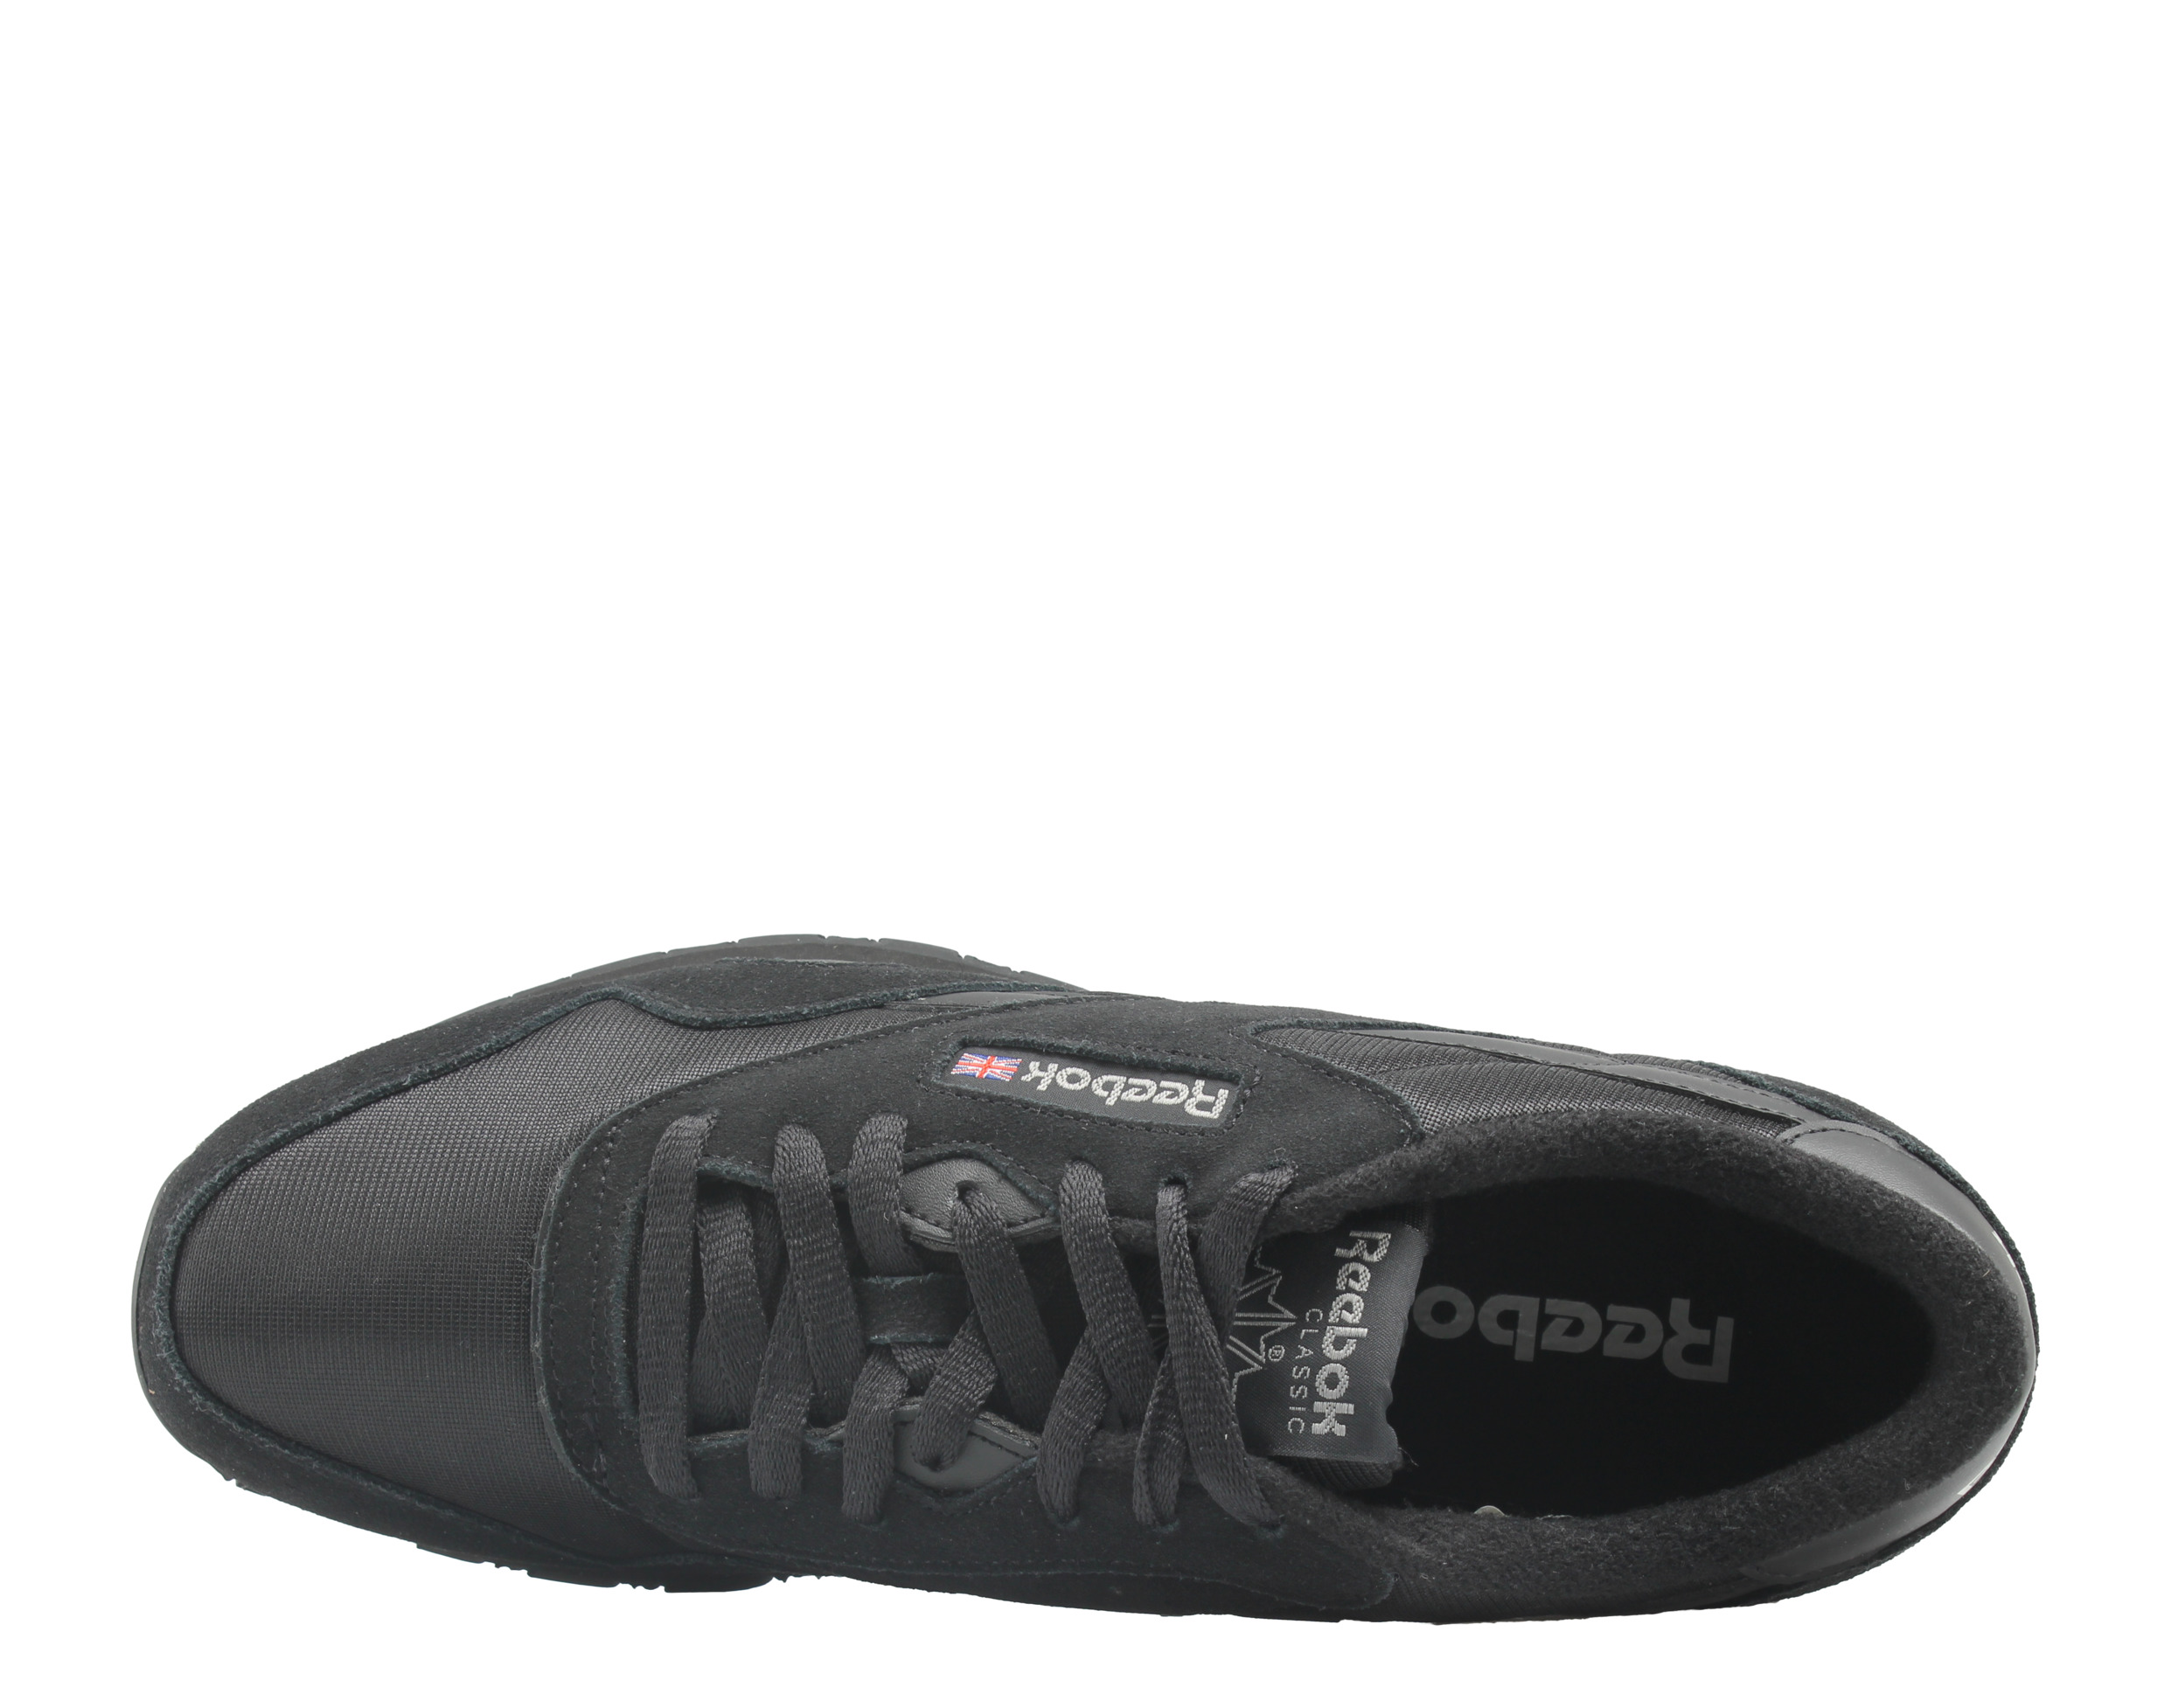 Reebok Classic Nylon Men's Running Shoes Size 12 - image 4 of 6